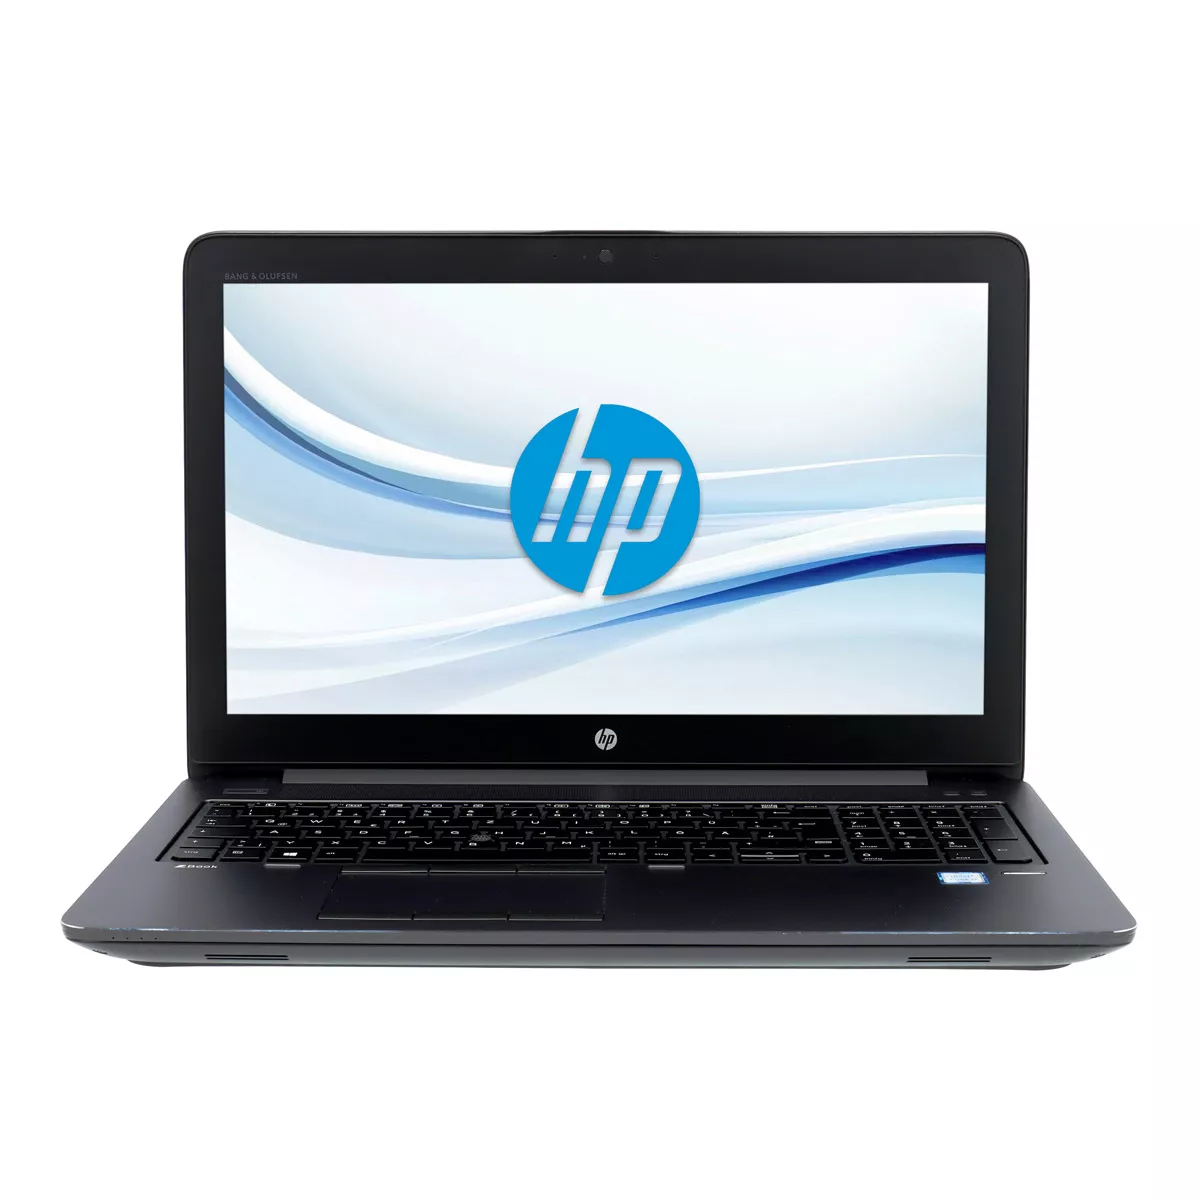 HP ZBook 15 G4 Core i7 7820HQ nVidia Quadro M2200M Full-HD 500 GB M.2 SSD Webcam B